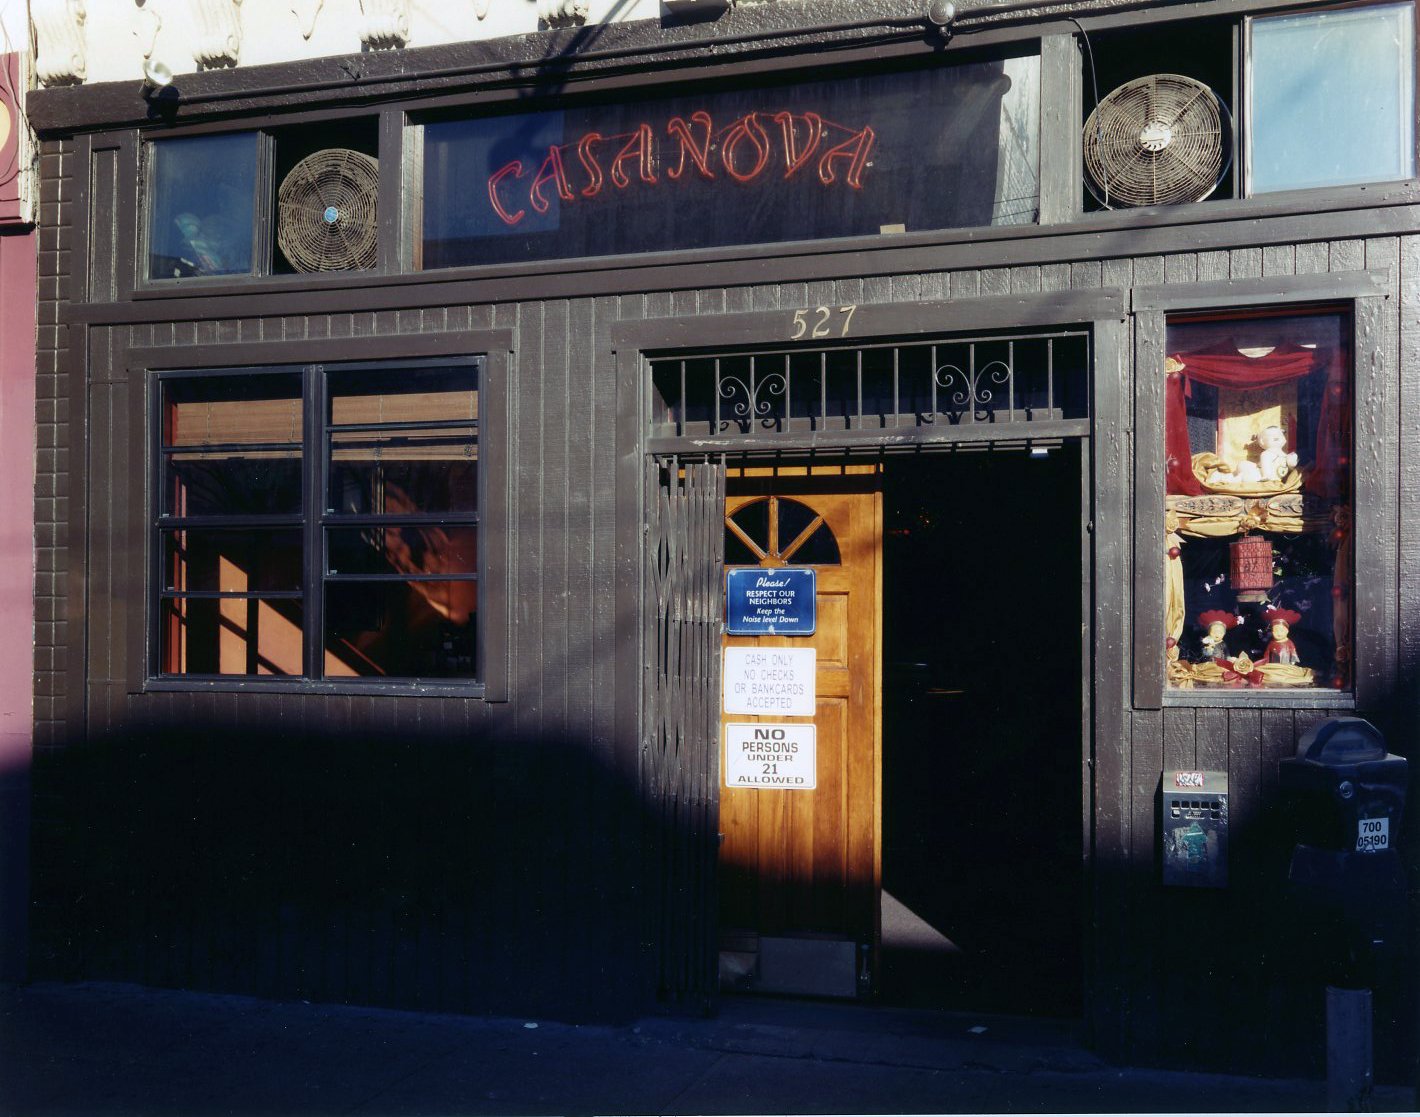  Casanova (Sofia's), San Francisco, California, 2007 